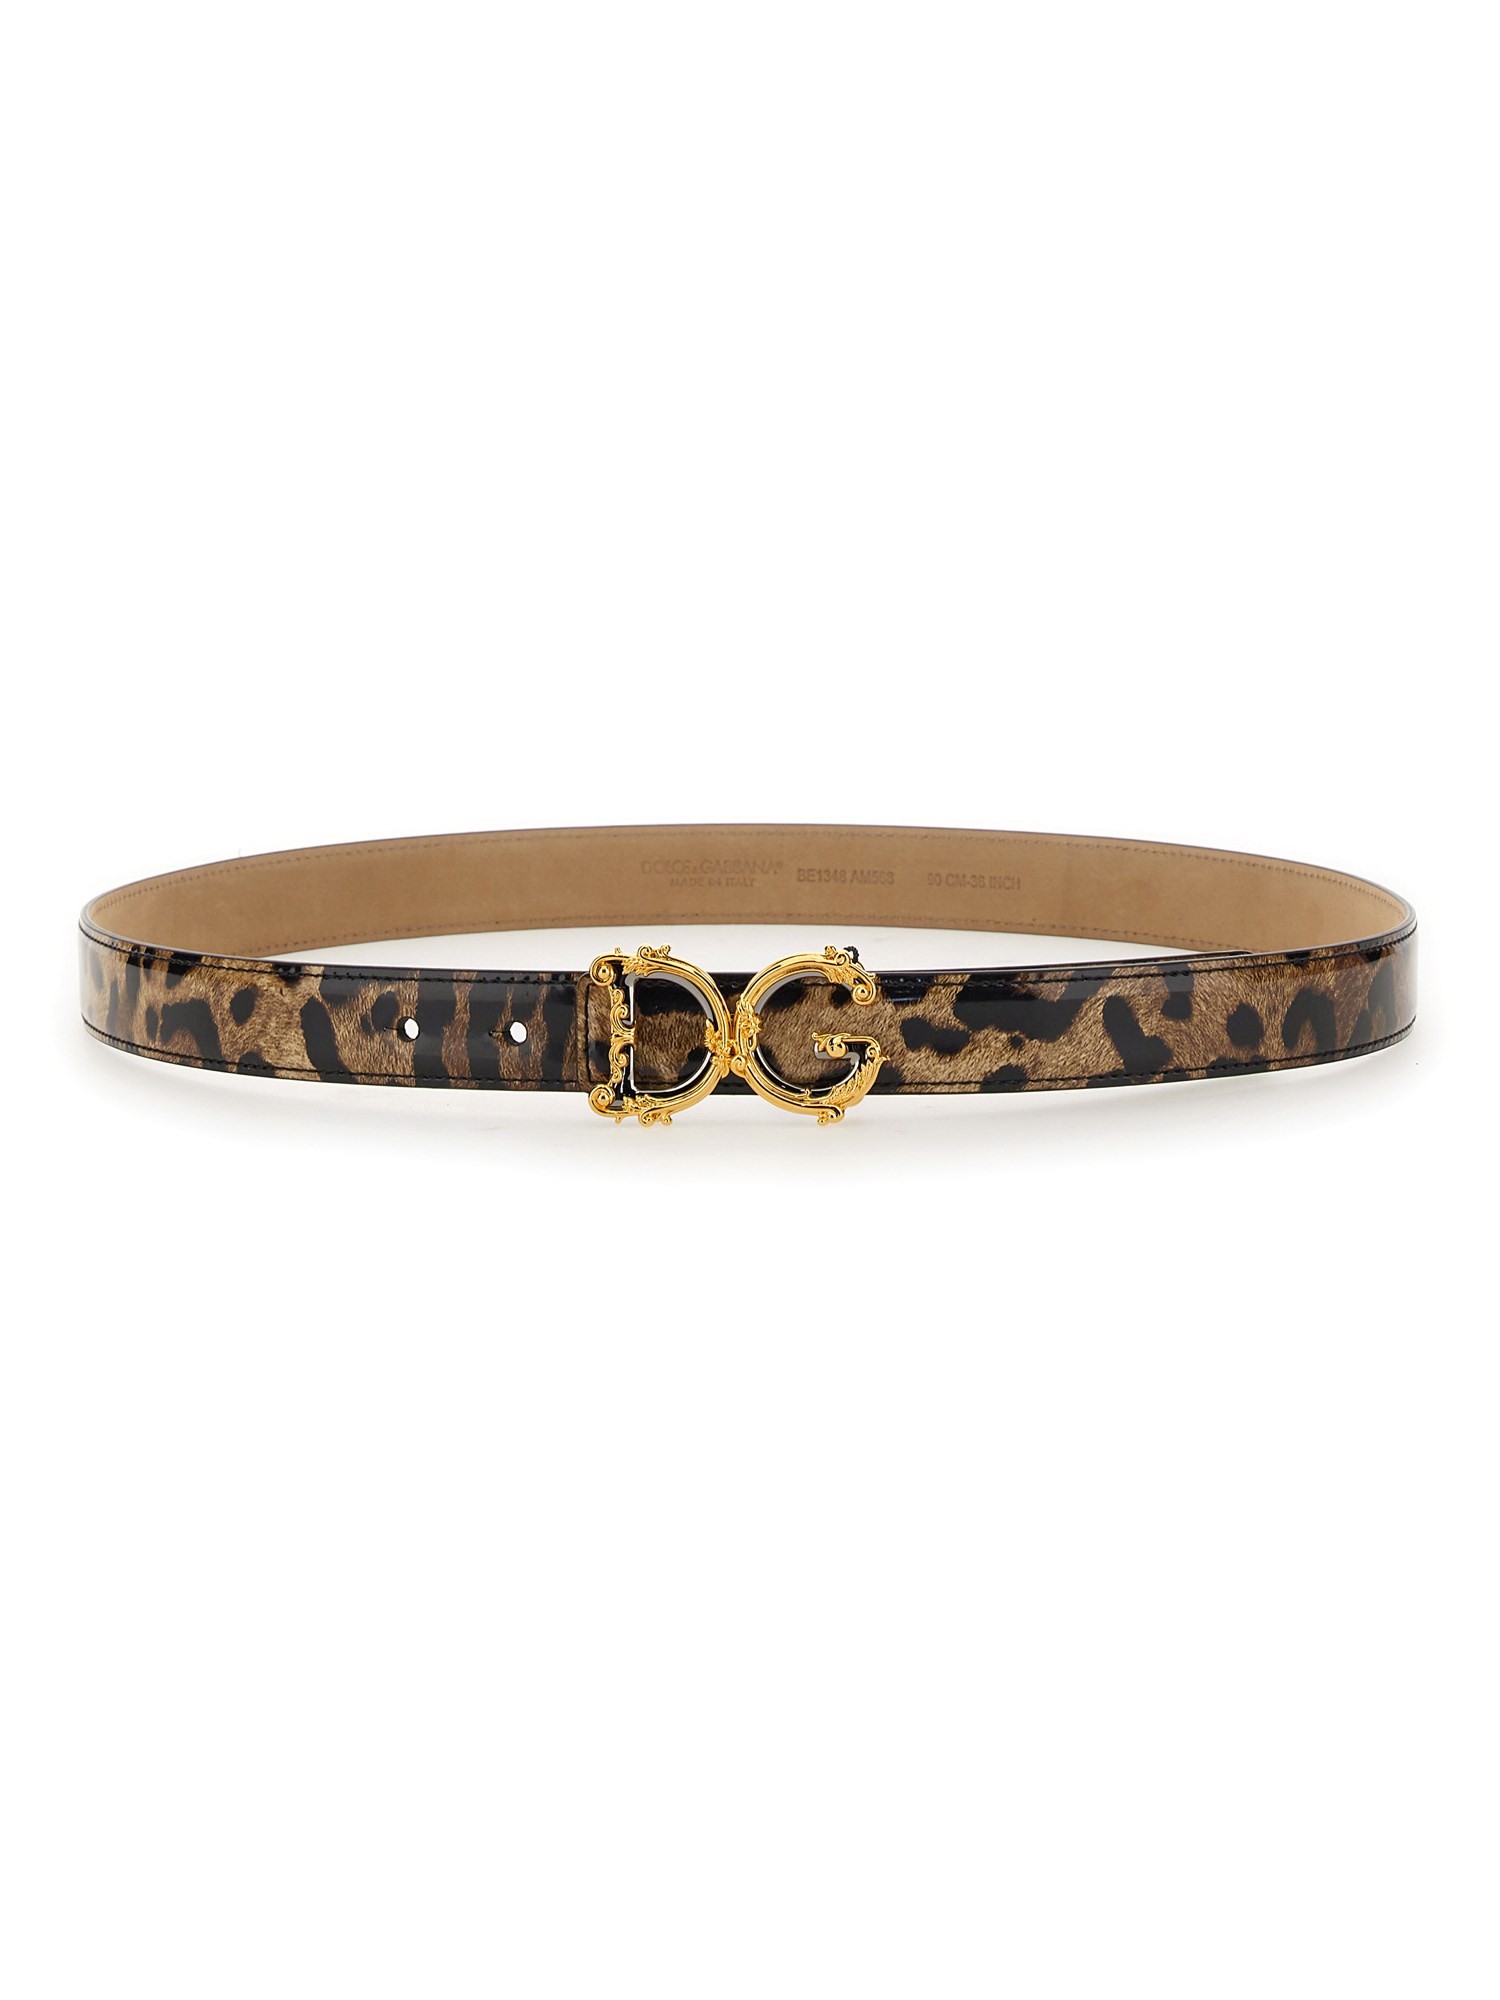 dolce & gabbana leopard print belt